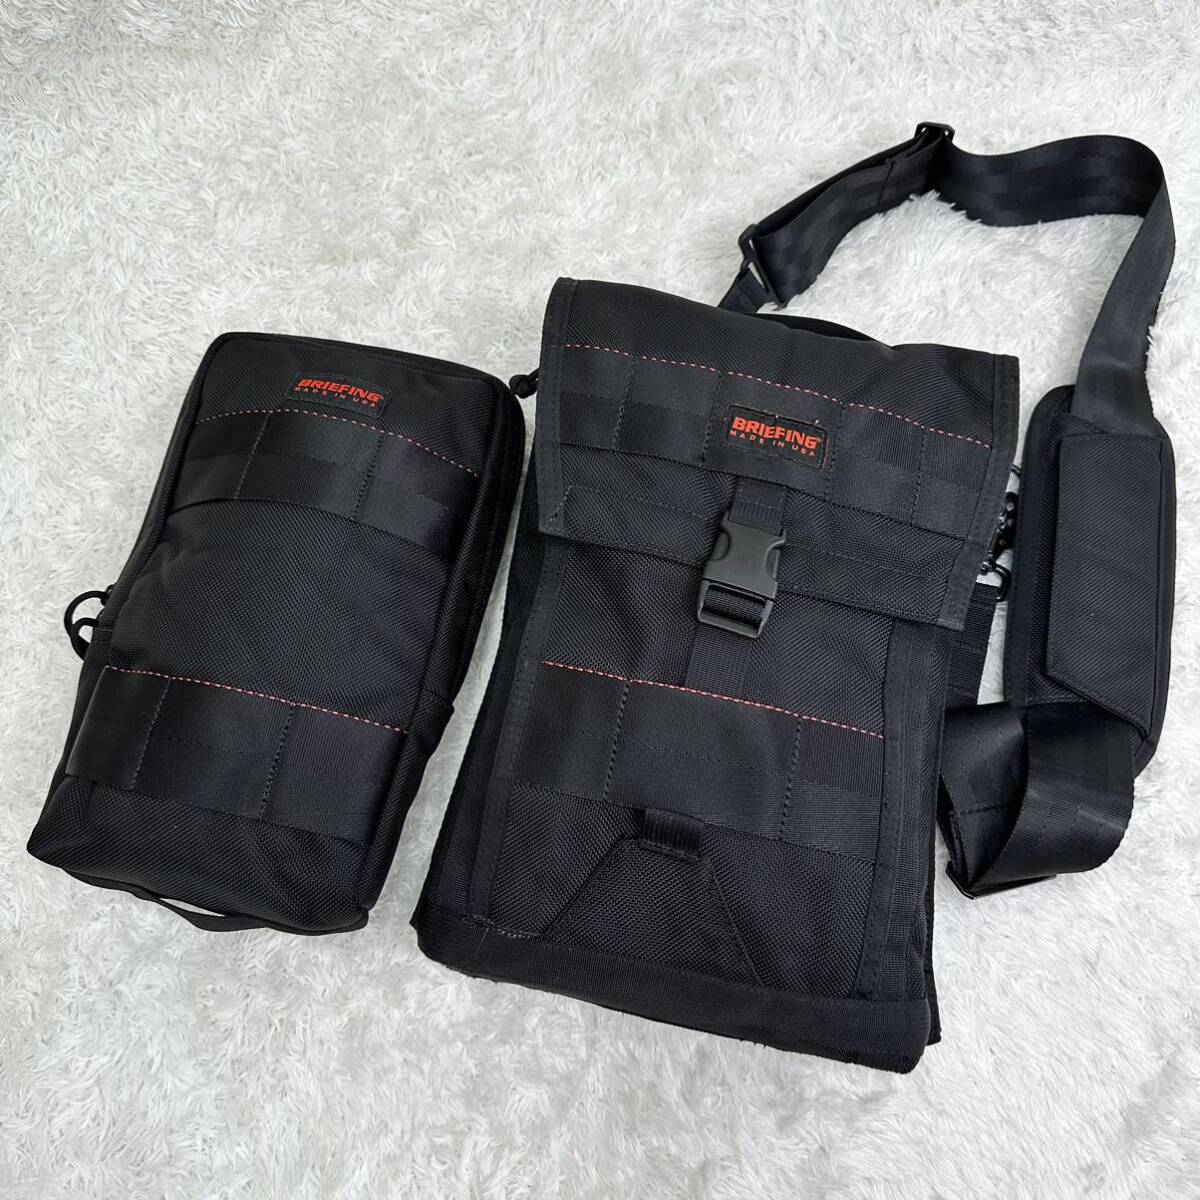 [ rare design 3way]BRIEFING shoulder bag body bag waist bag black black Briefing high capacity shoulder .. Cross body 